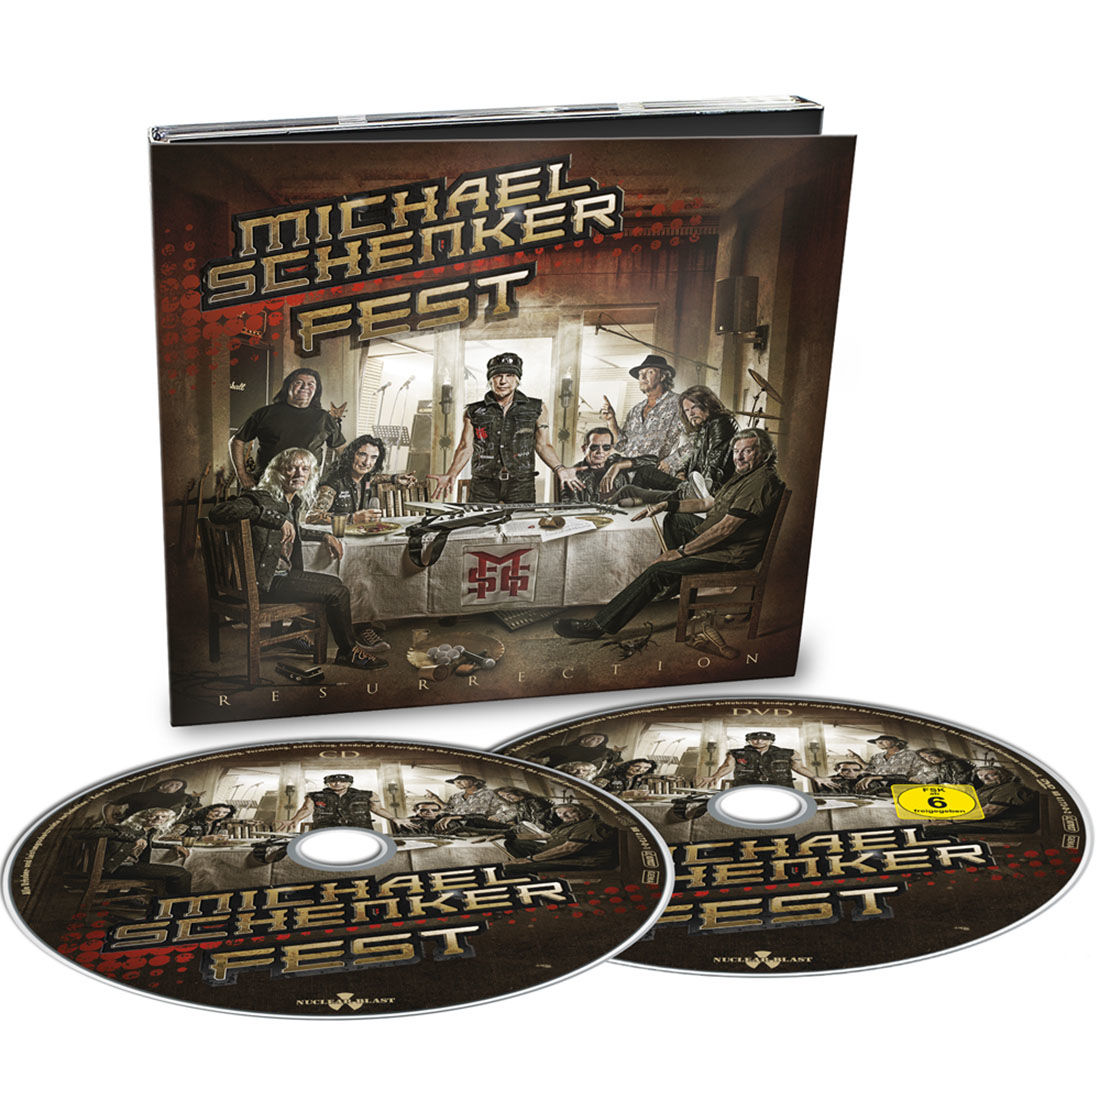 Michael Schenker Fest - Resurrection: Limited Edition CD + DVD